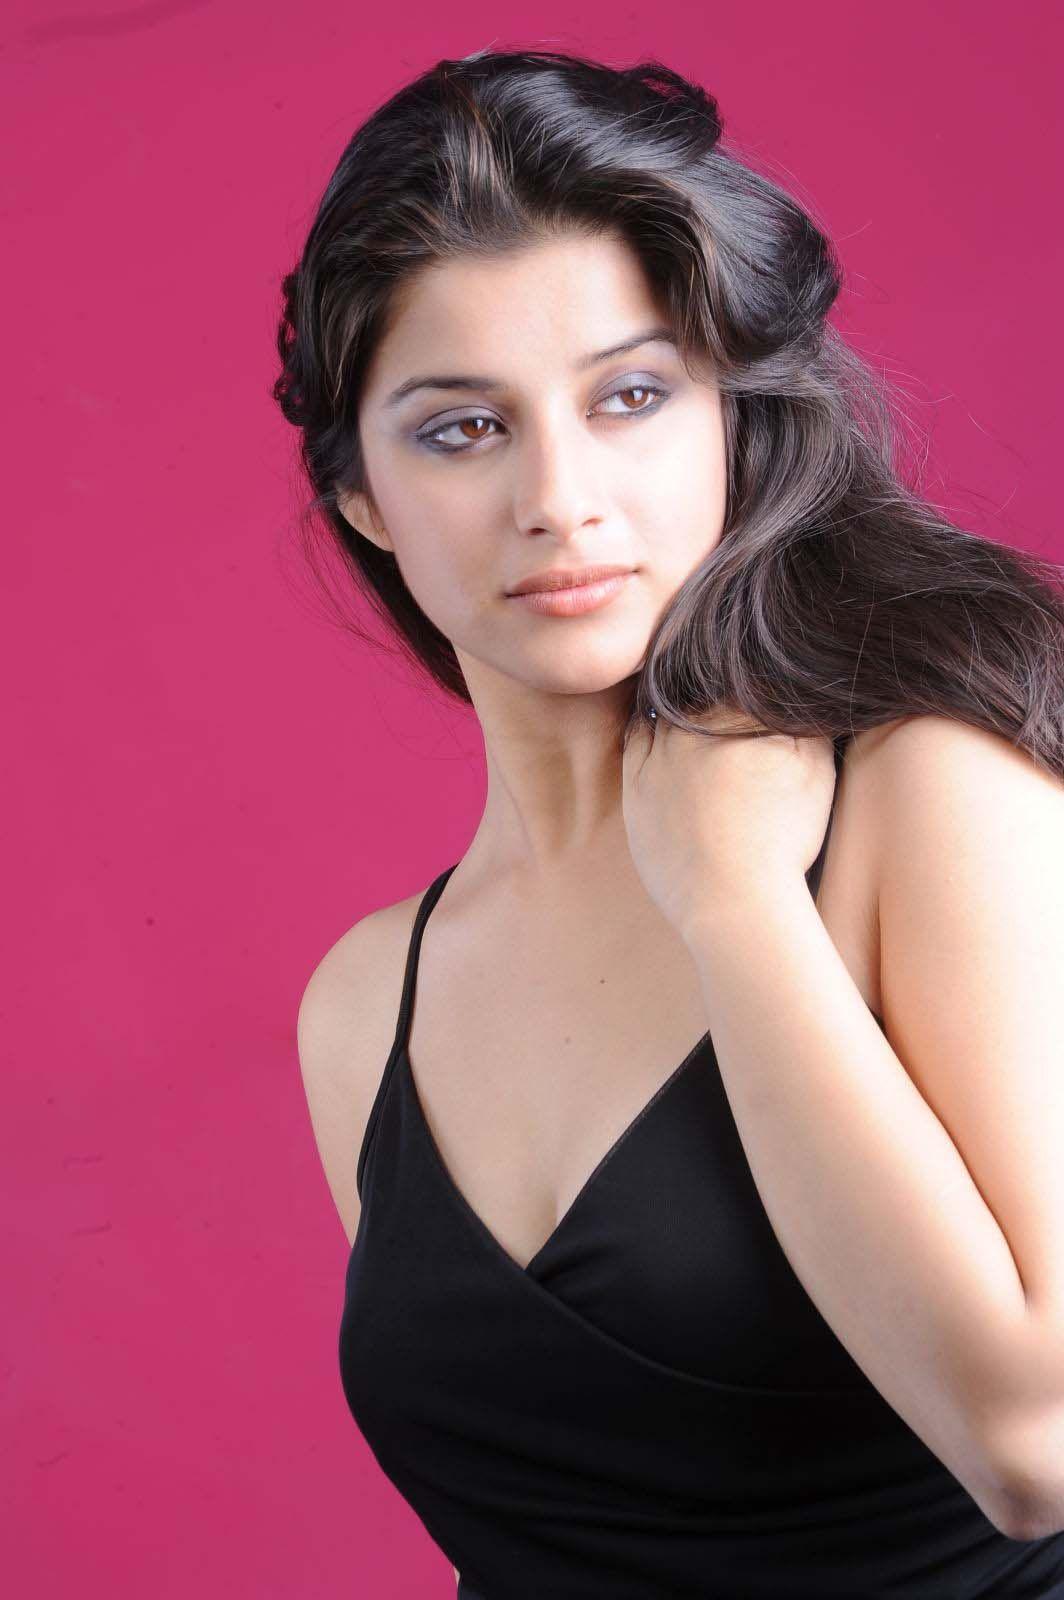 Telugu Actress Madhurima Latest Hot & Spicy Photo Stills